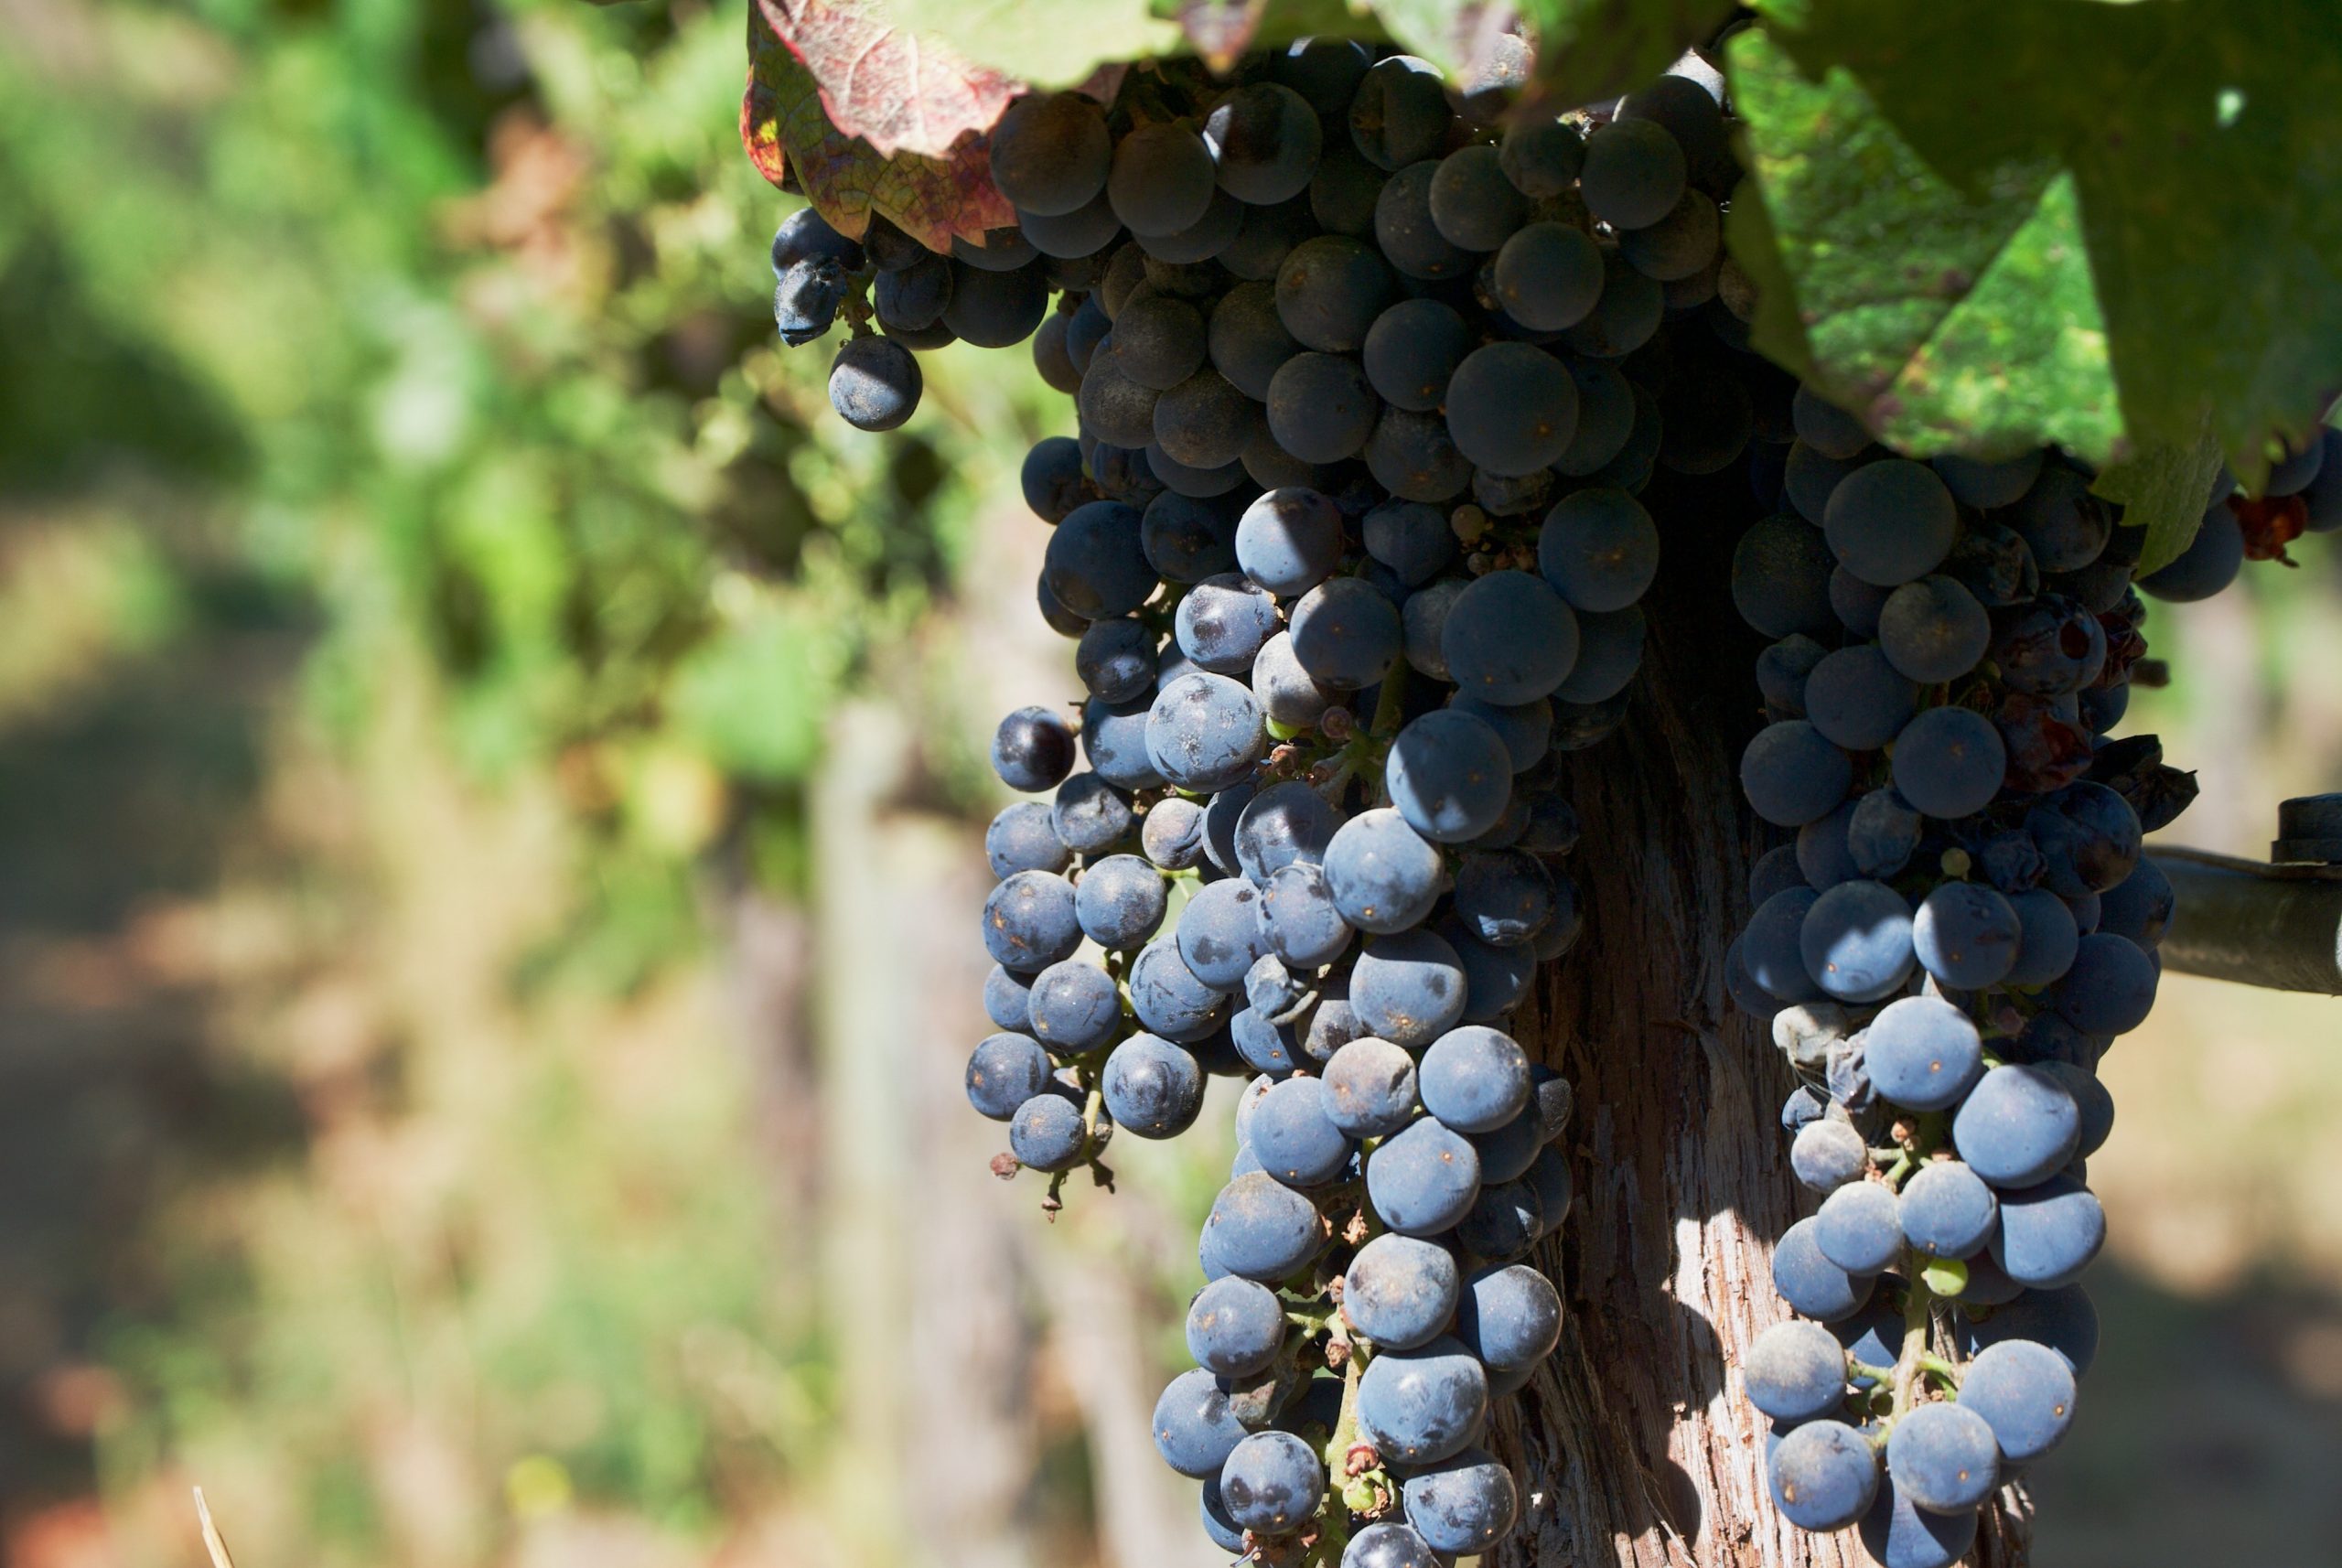 Wine grapes in Chile